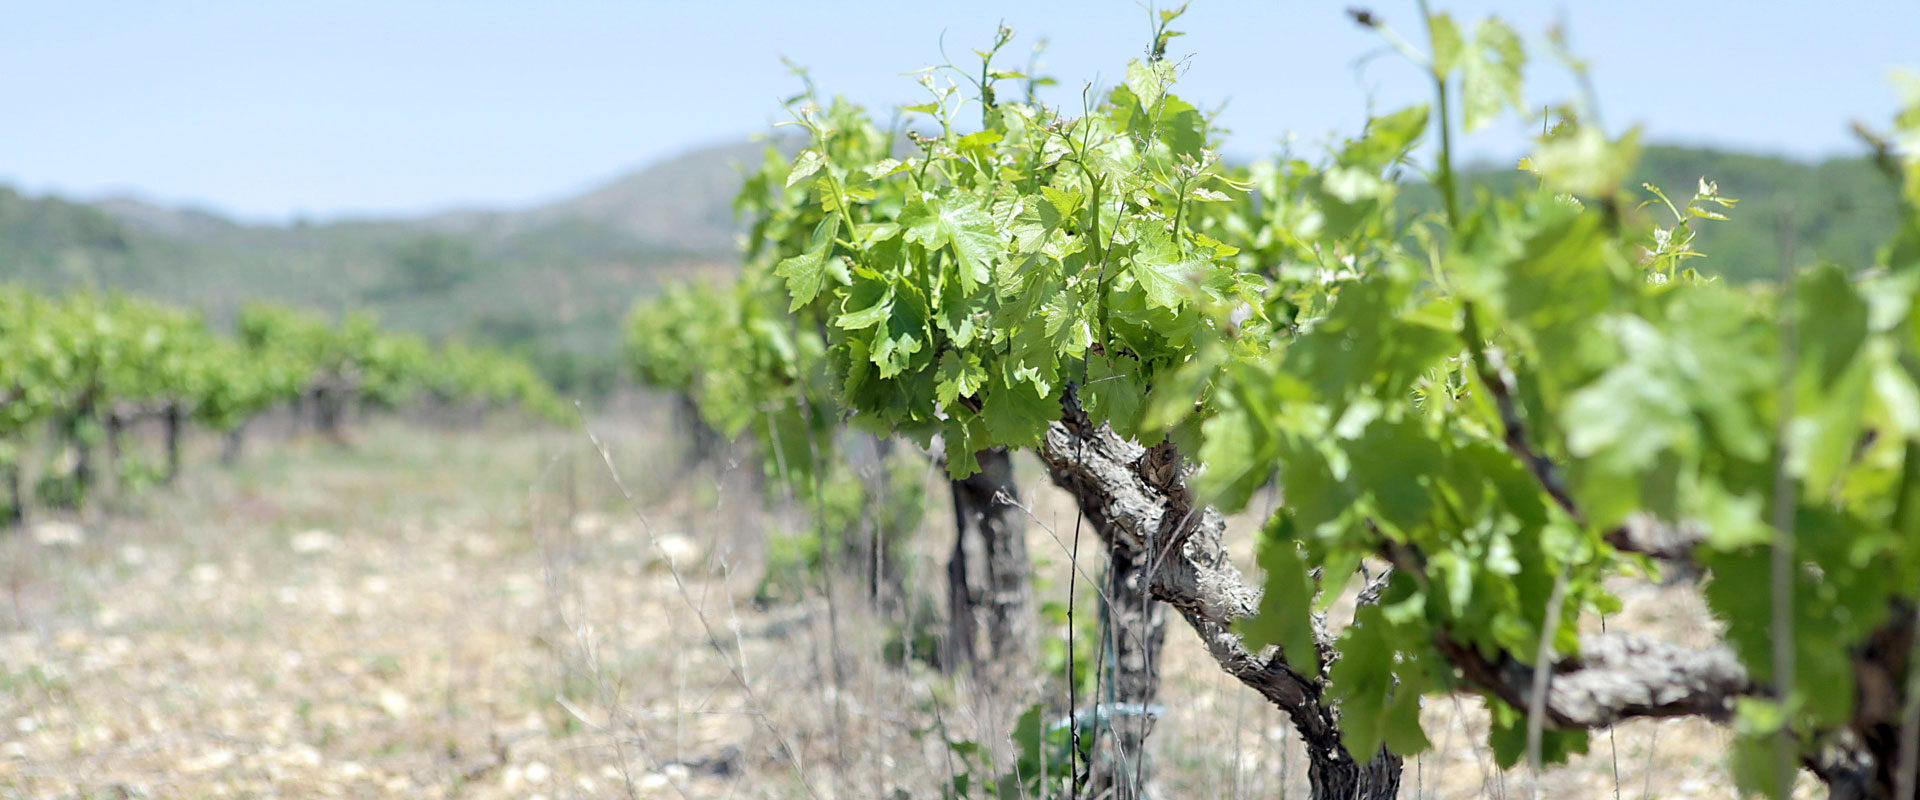 Nestor Winery - Our vineyards